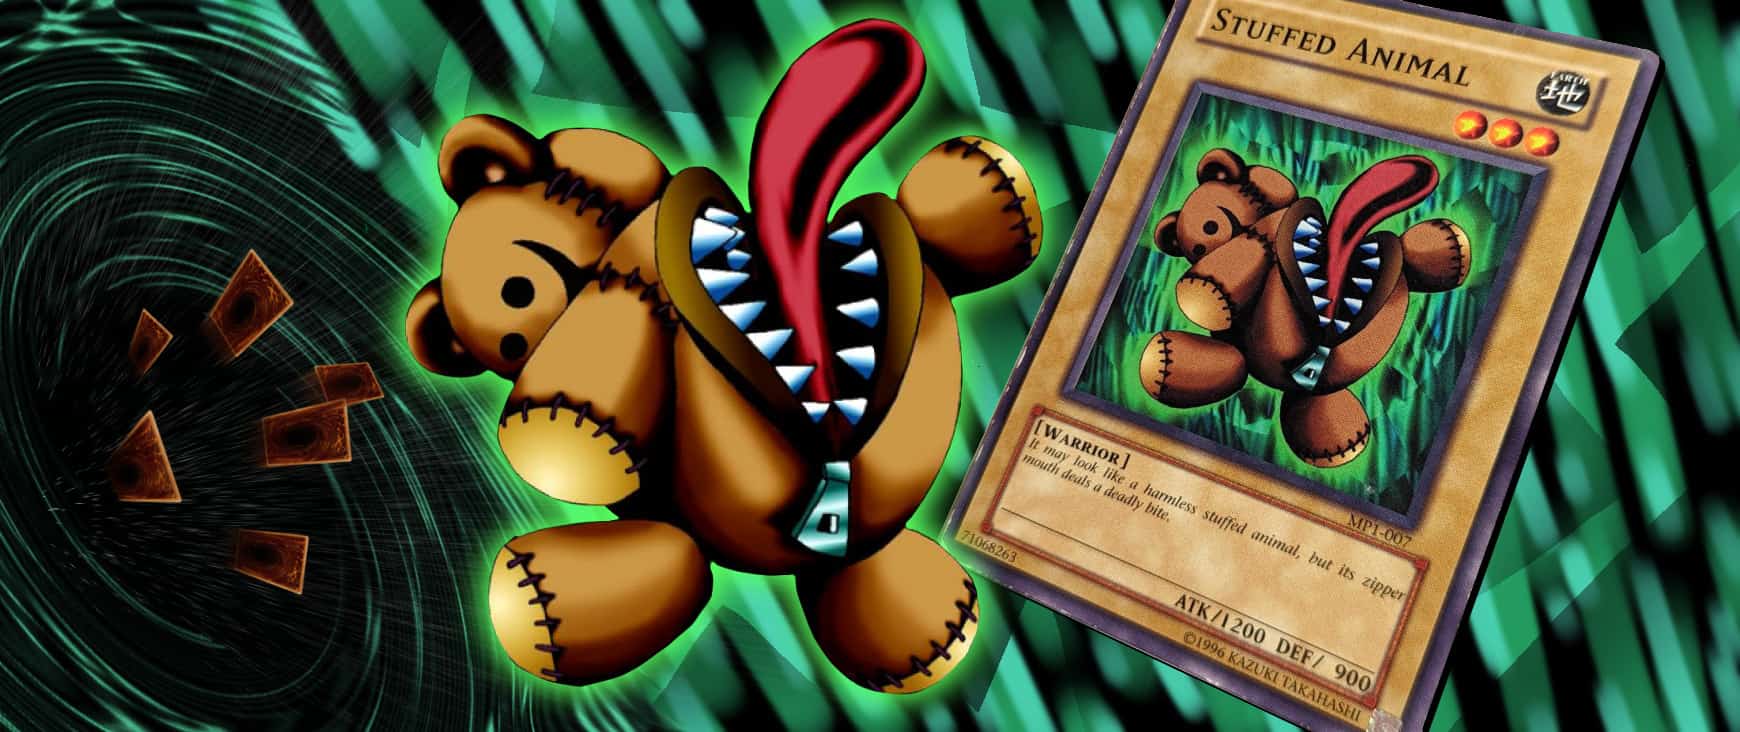 Stuffed Animals Yu-Gi-Oh! card